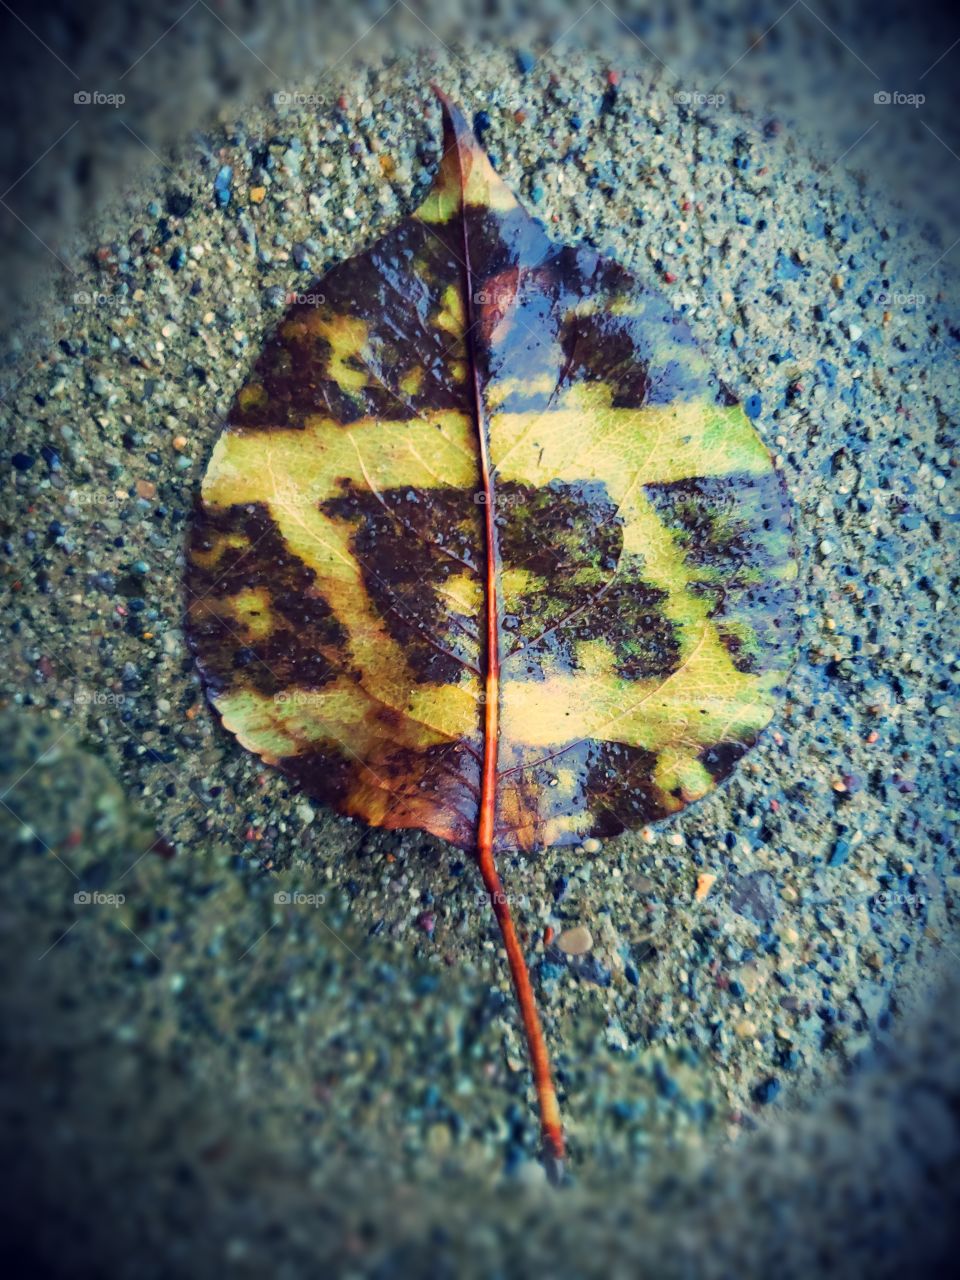 Neat pattern on one single leaf.